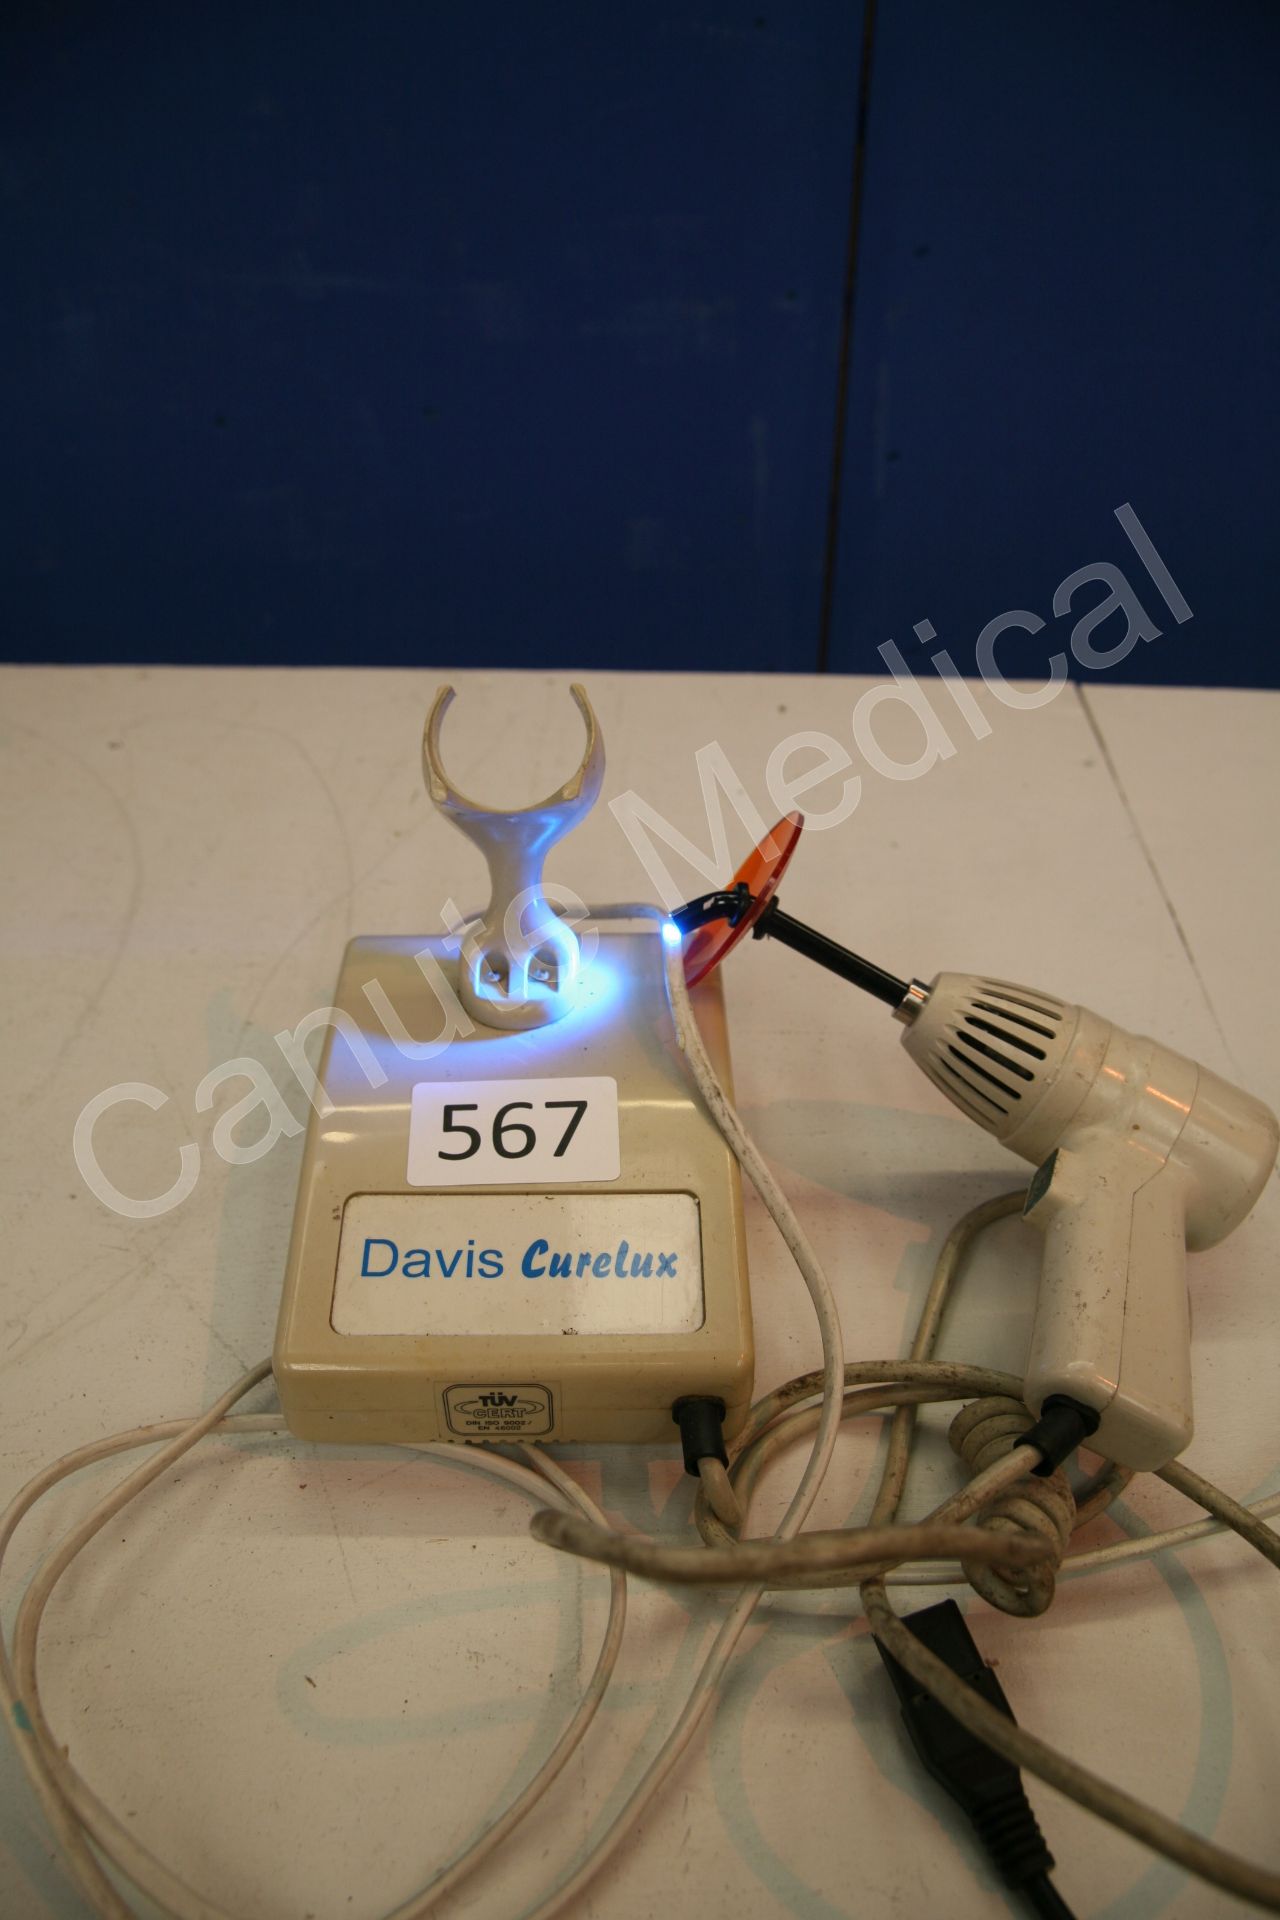 Davis Curelux Dental Curing Light,